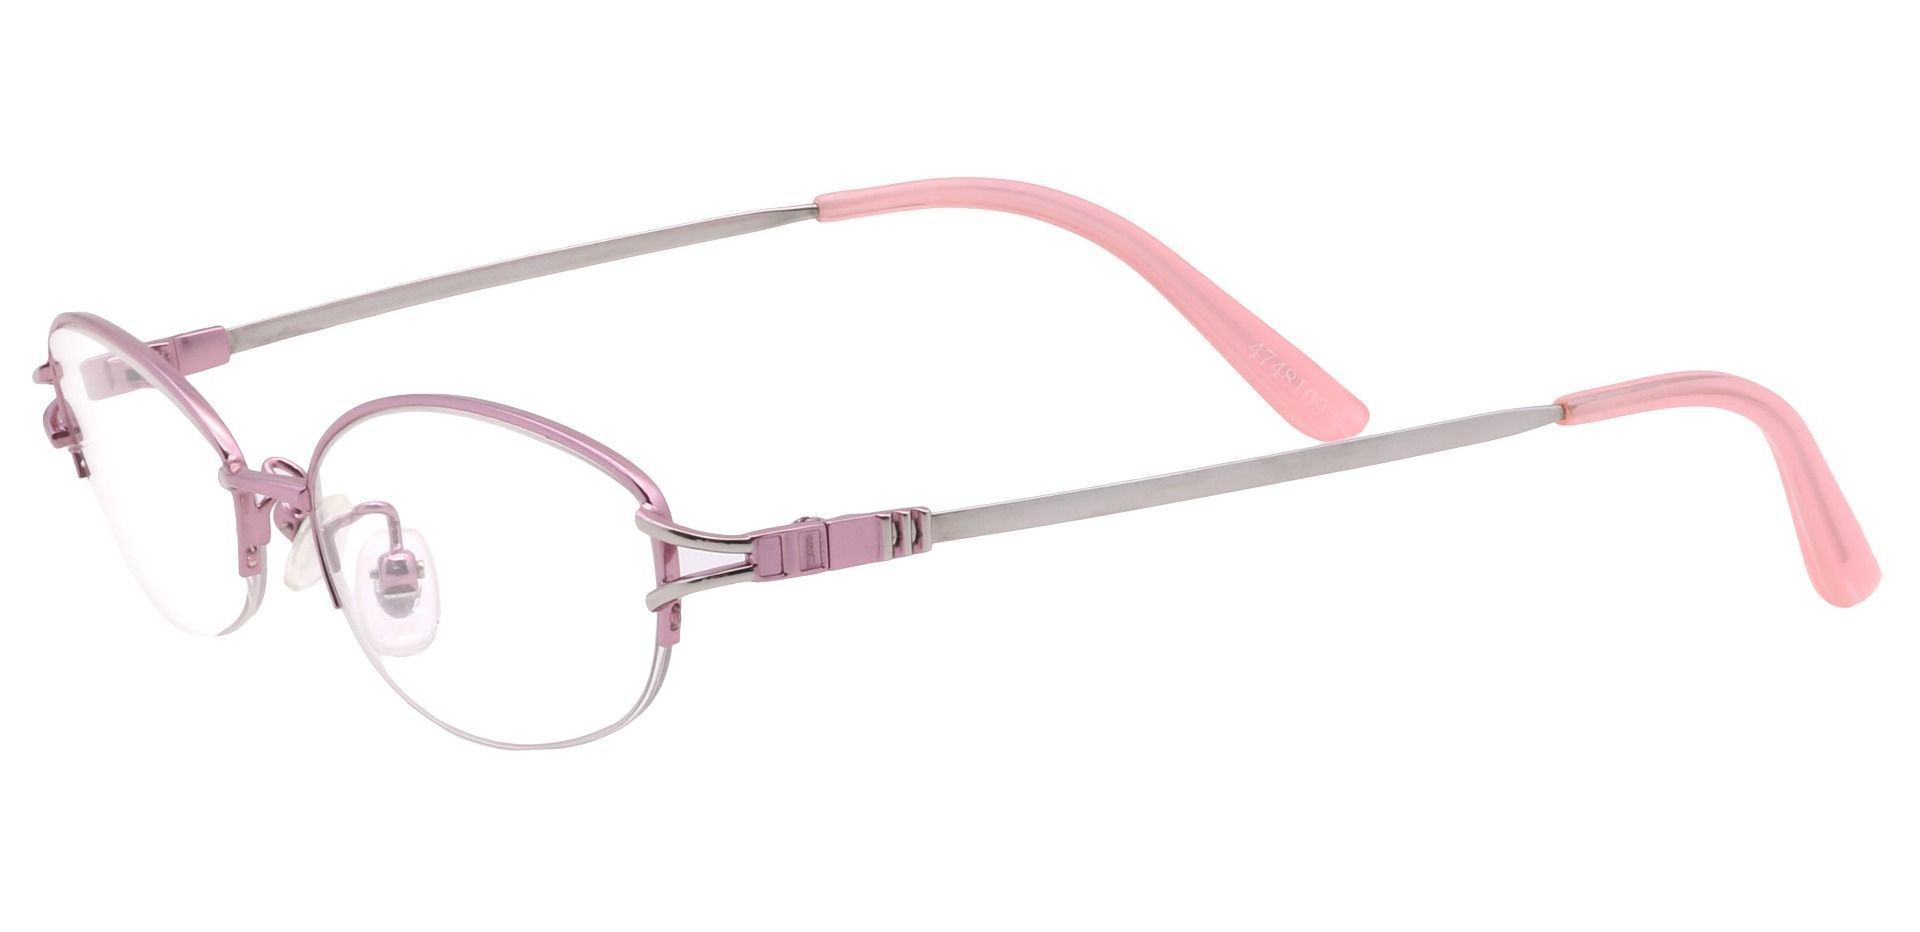 Corsica Oval Single Vision Glasses - Pink